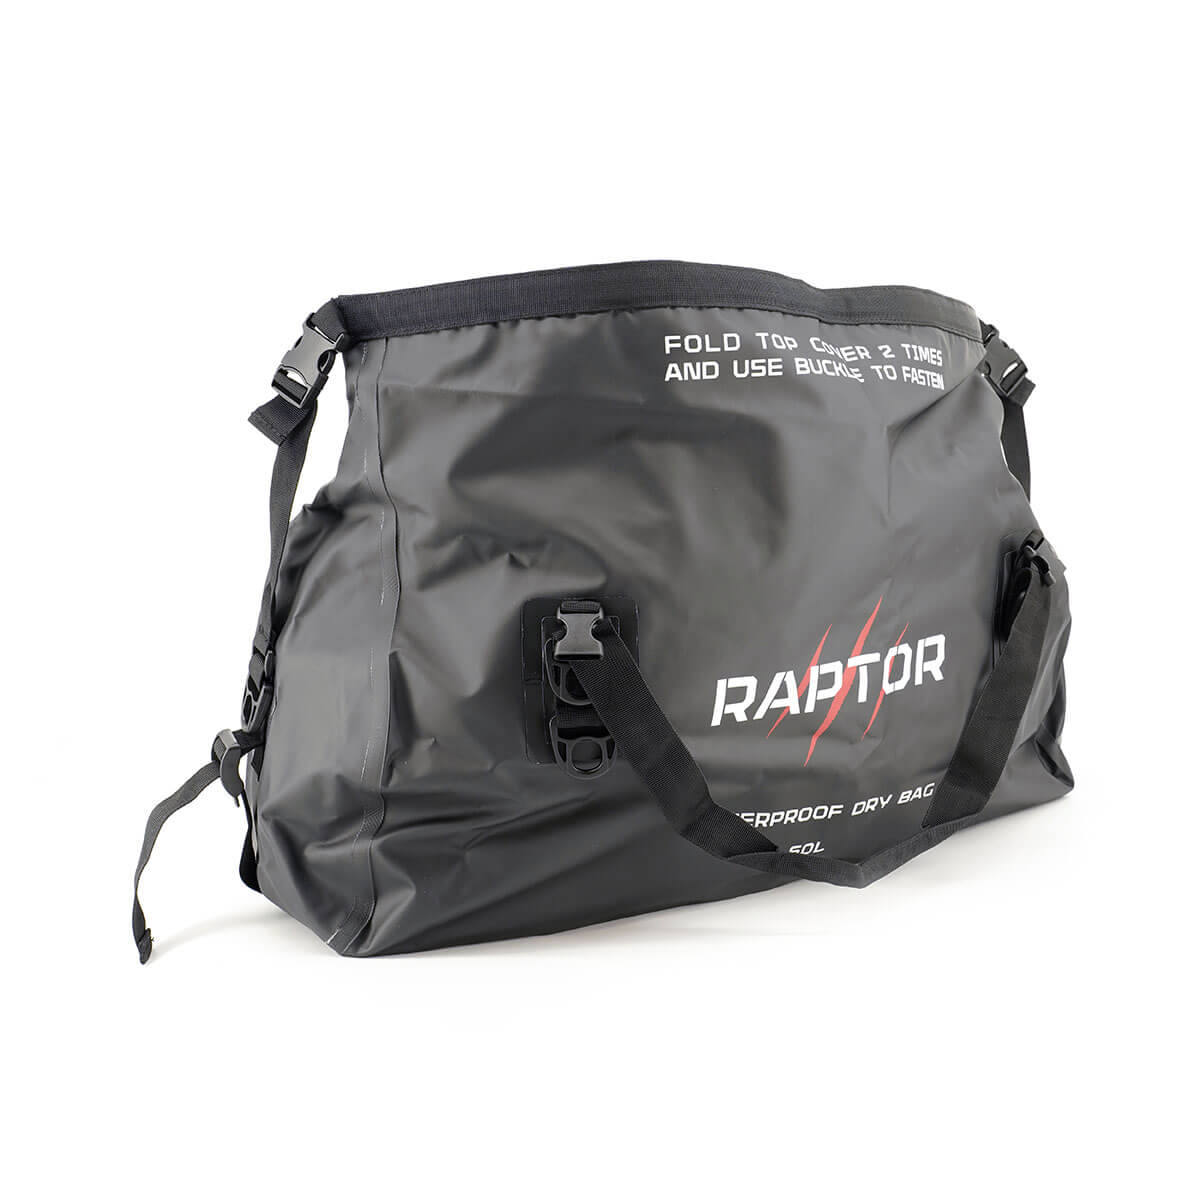 Sac imperméable ultraléger - 60 L||Ultra light dry bag - 60 L